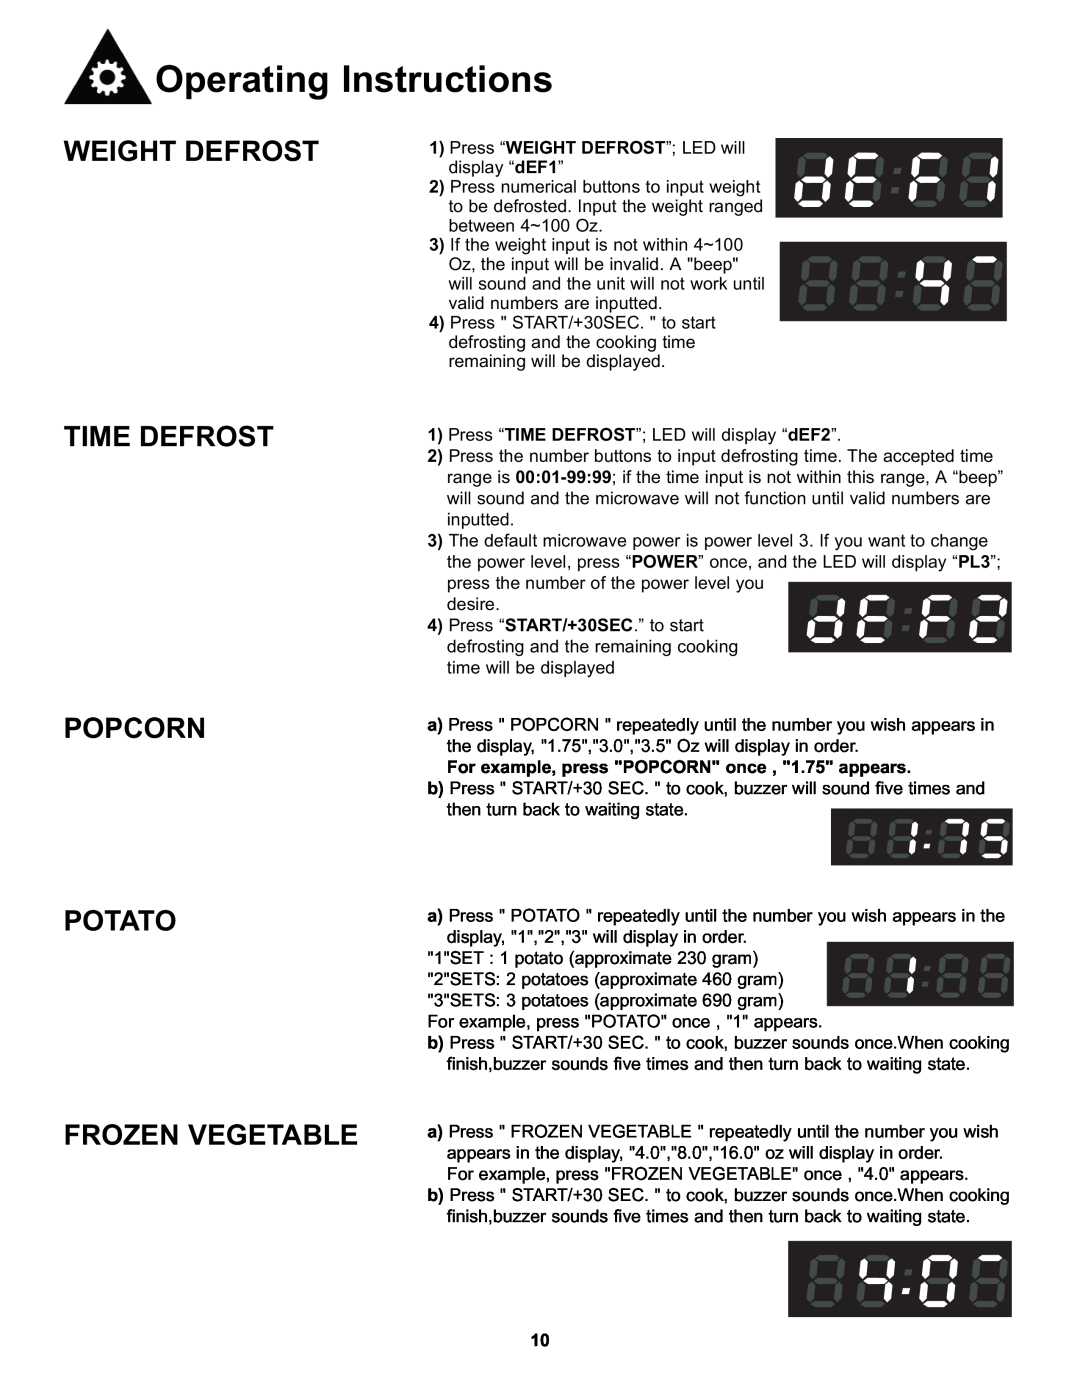 Danby DMW111KWDB manual Weight Defrost, Time Defrost Popcorn Potato Frozen Vegetable, Operating Instructions 